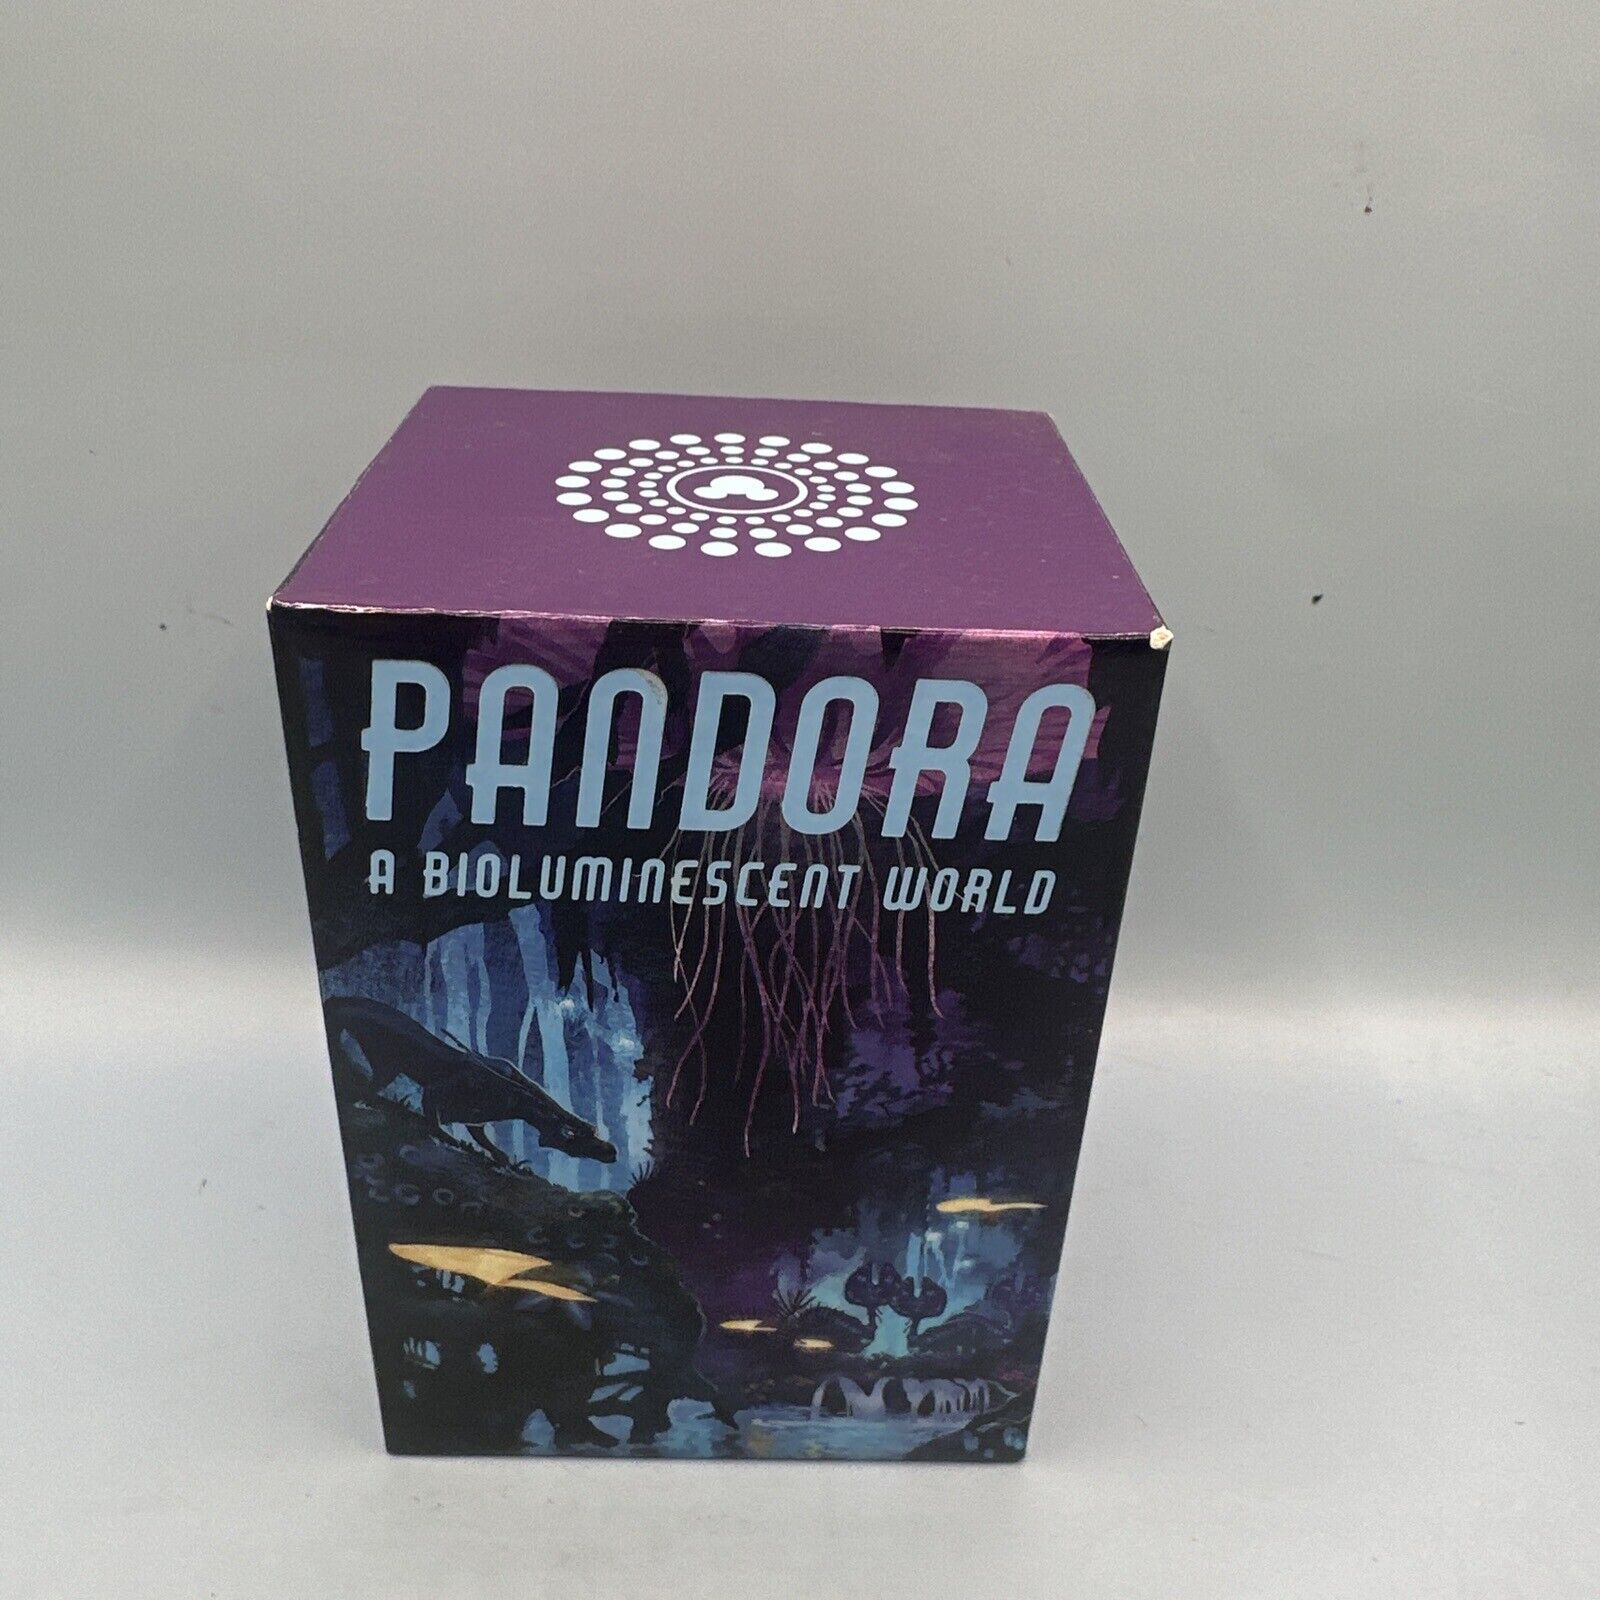 Disney MagicBand 2.0 Pandora grand opening Limited Edition 2,000